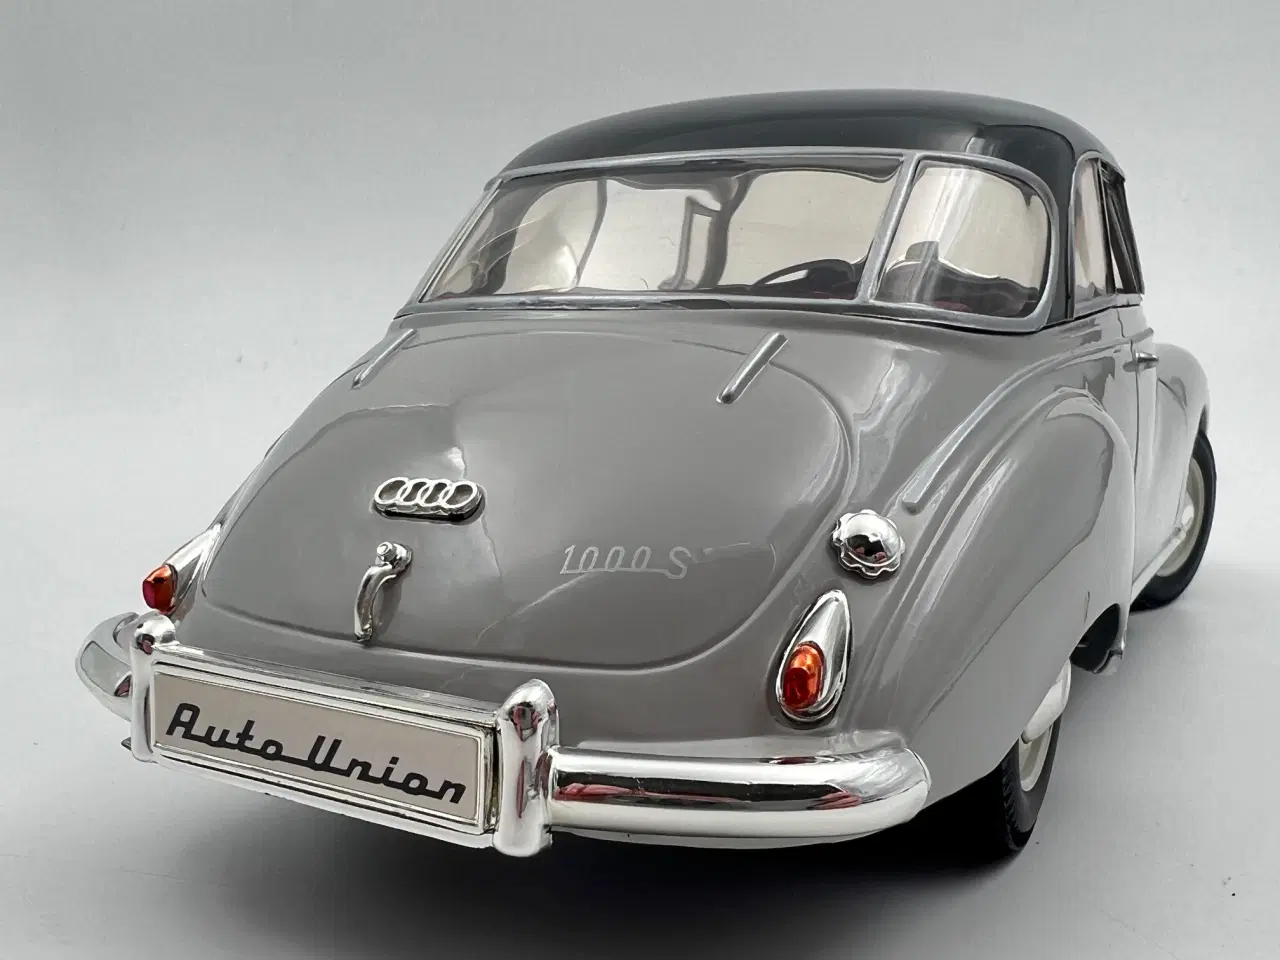 Billede 8 - 1960 Audi Auto Union 1000S Coupe 1:18